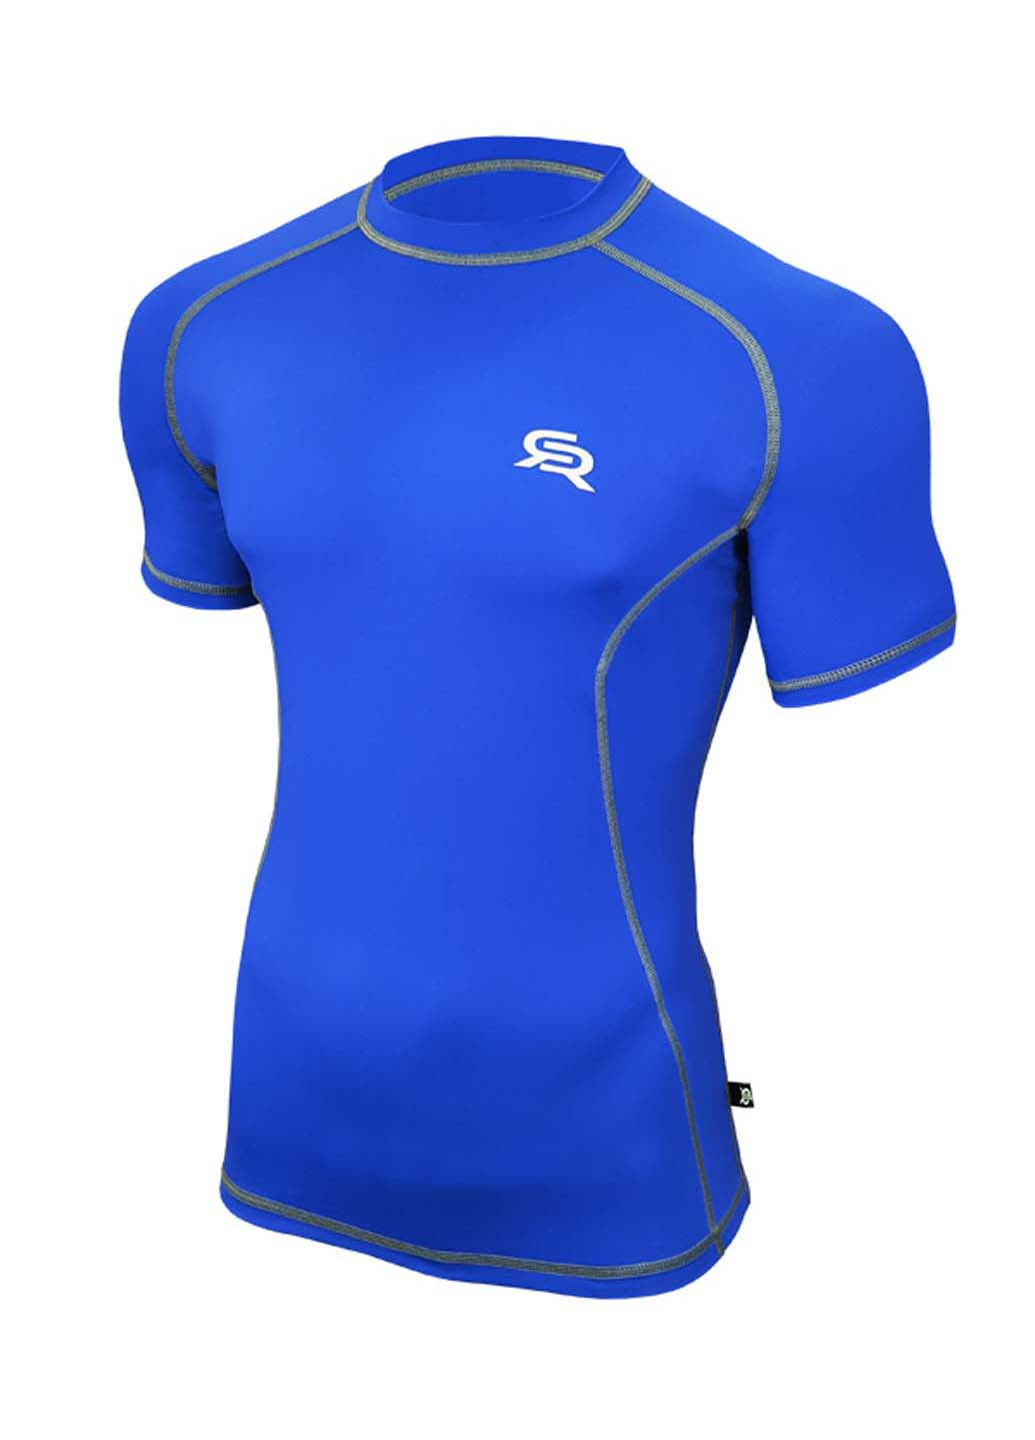 Спортивная футболка Radical логотип синяя спортивная полиэстер